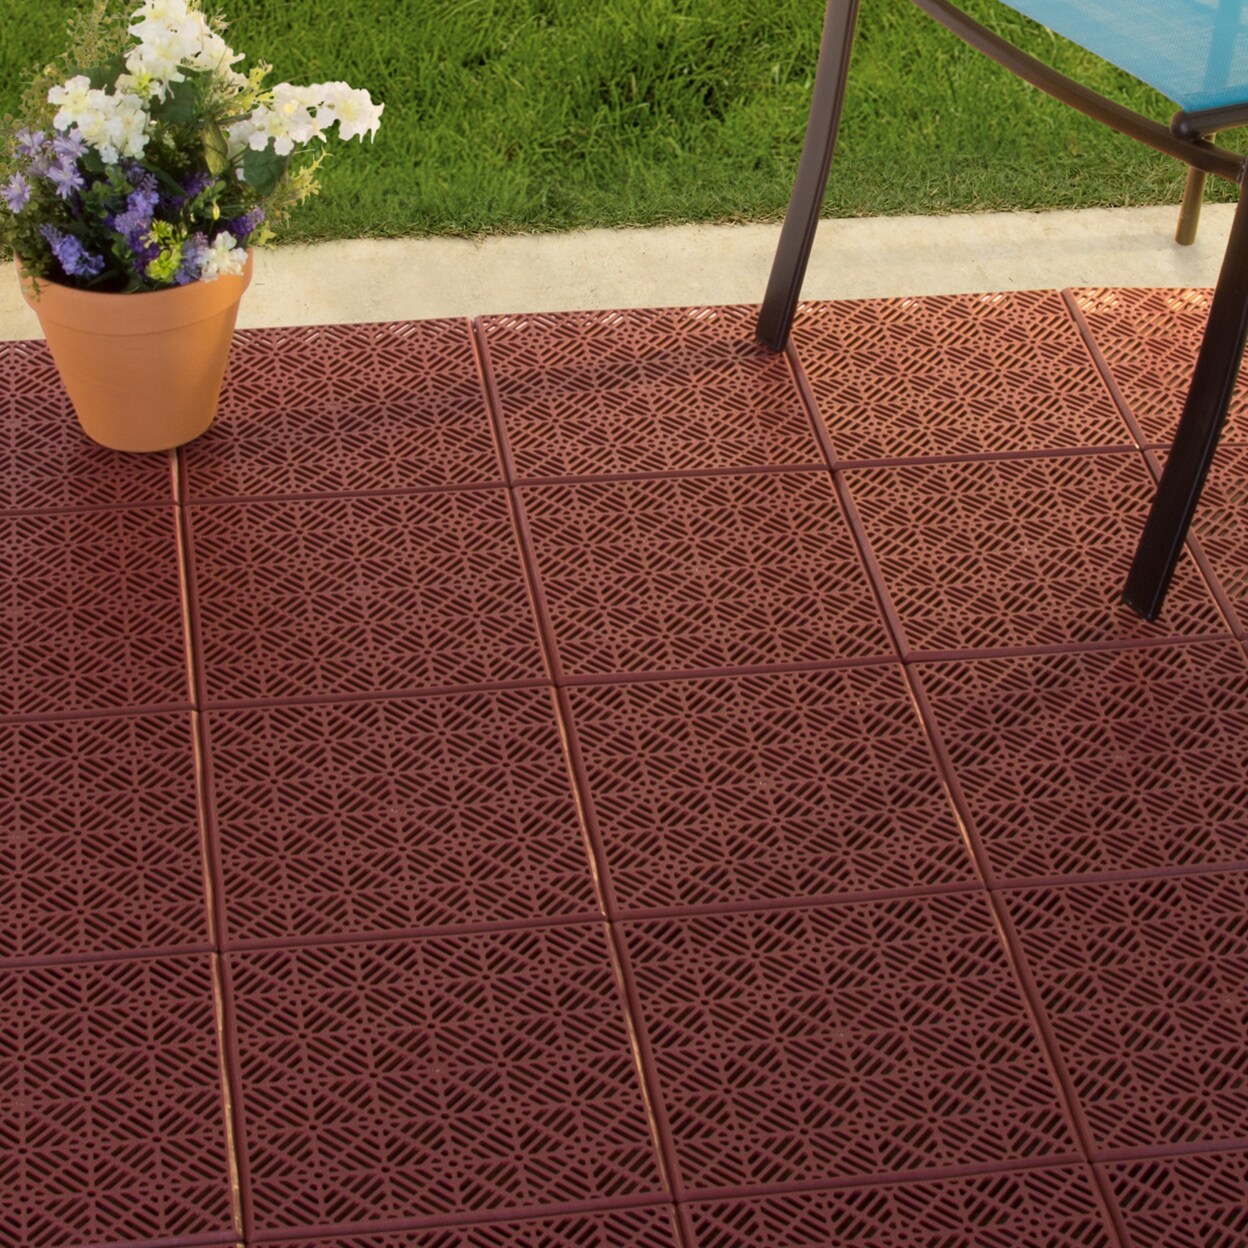 Pure Garden   Interlocking Patio Deck or Garage Floor Tiles - 12 x 12